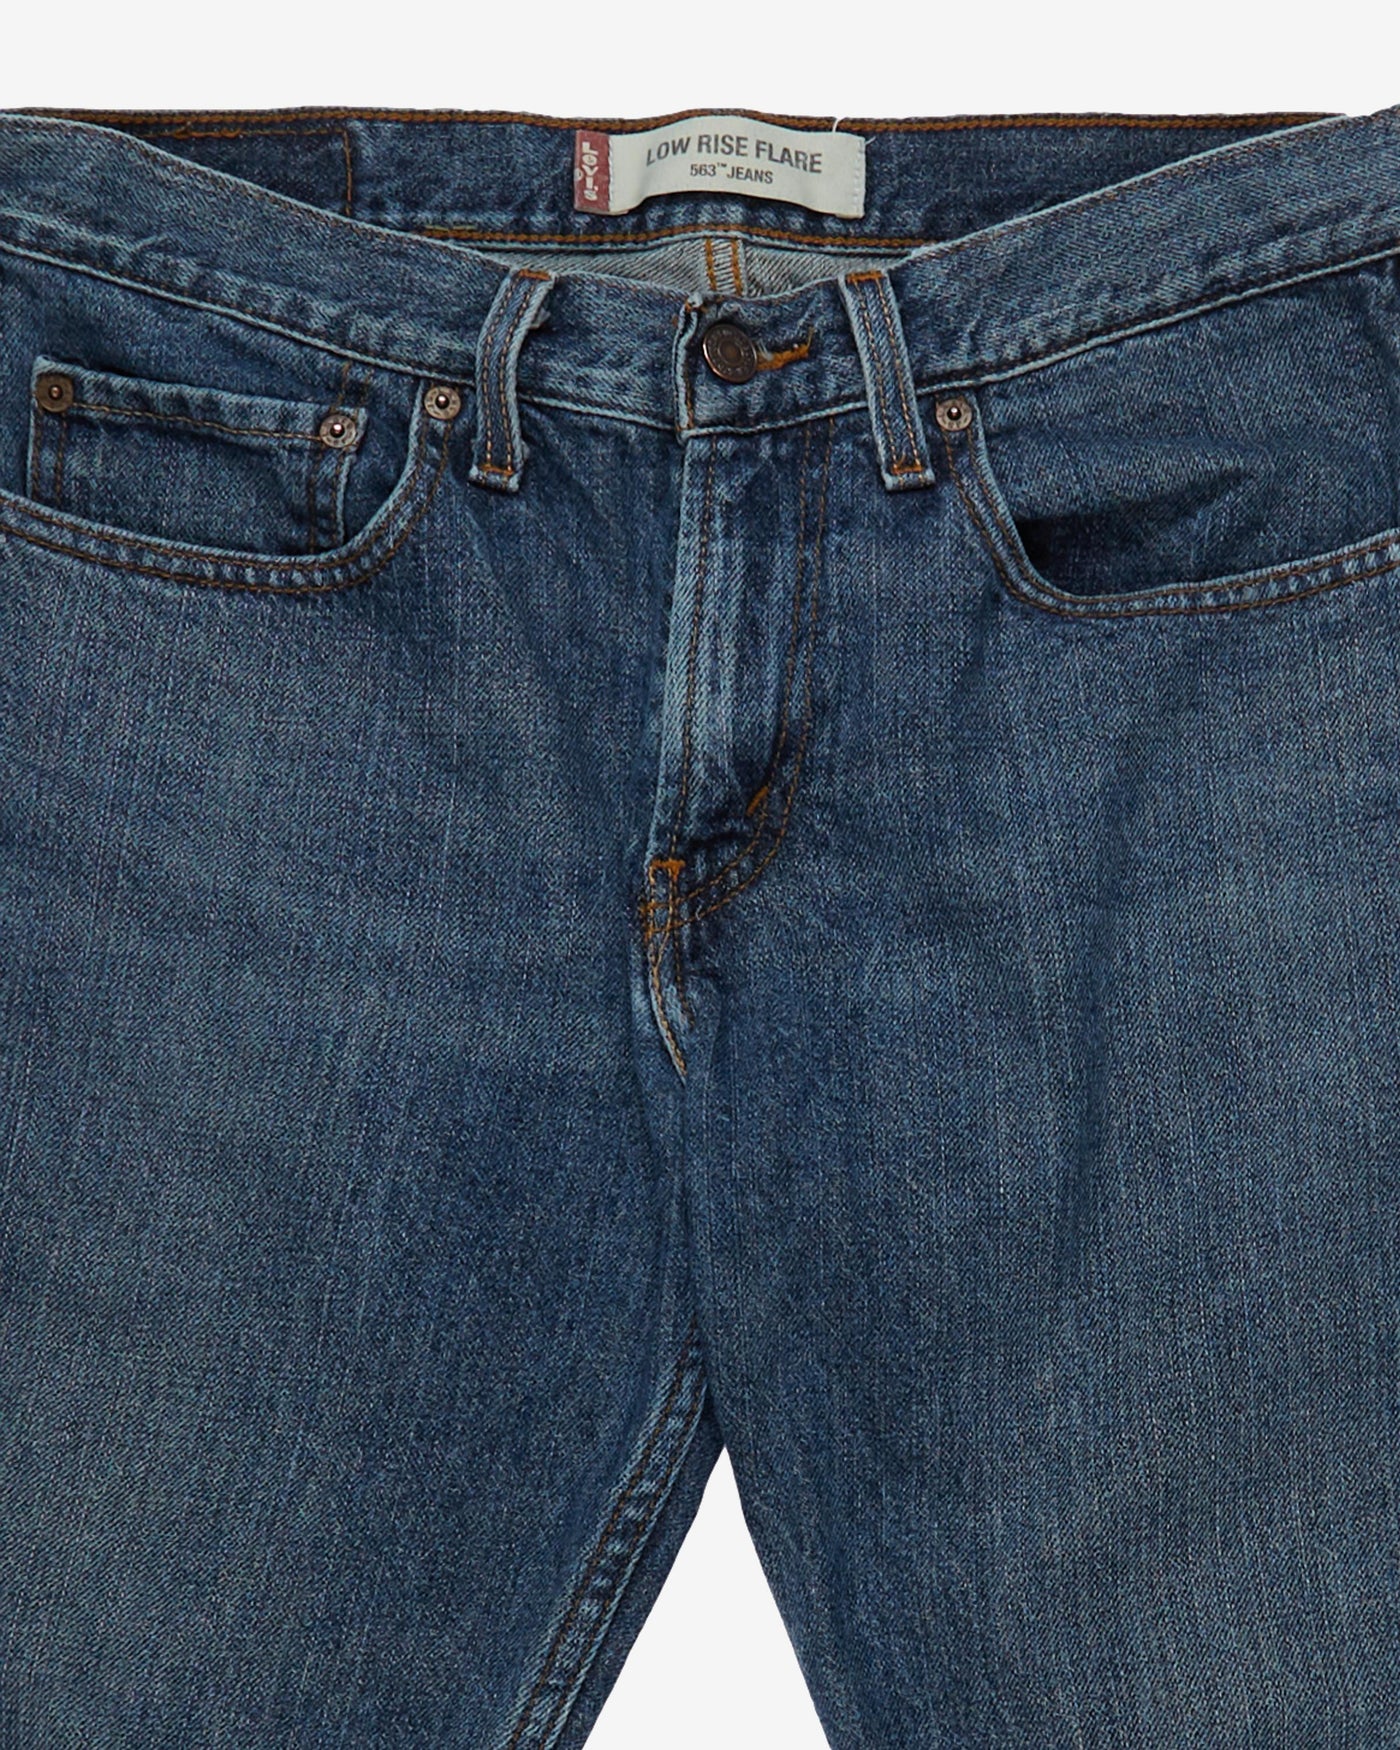 Levi's 563 Blue Denim Frayed Shorts - W32